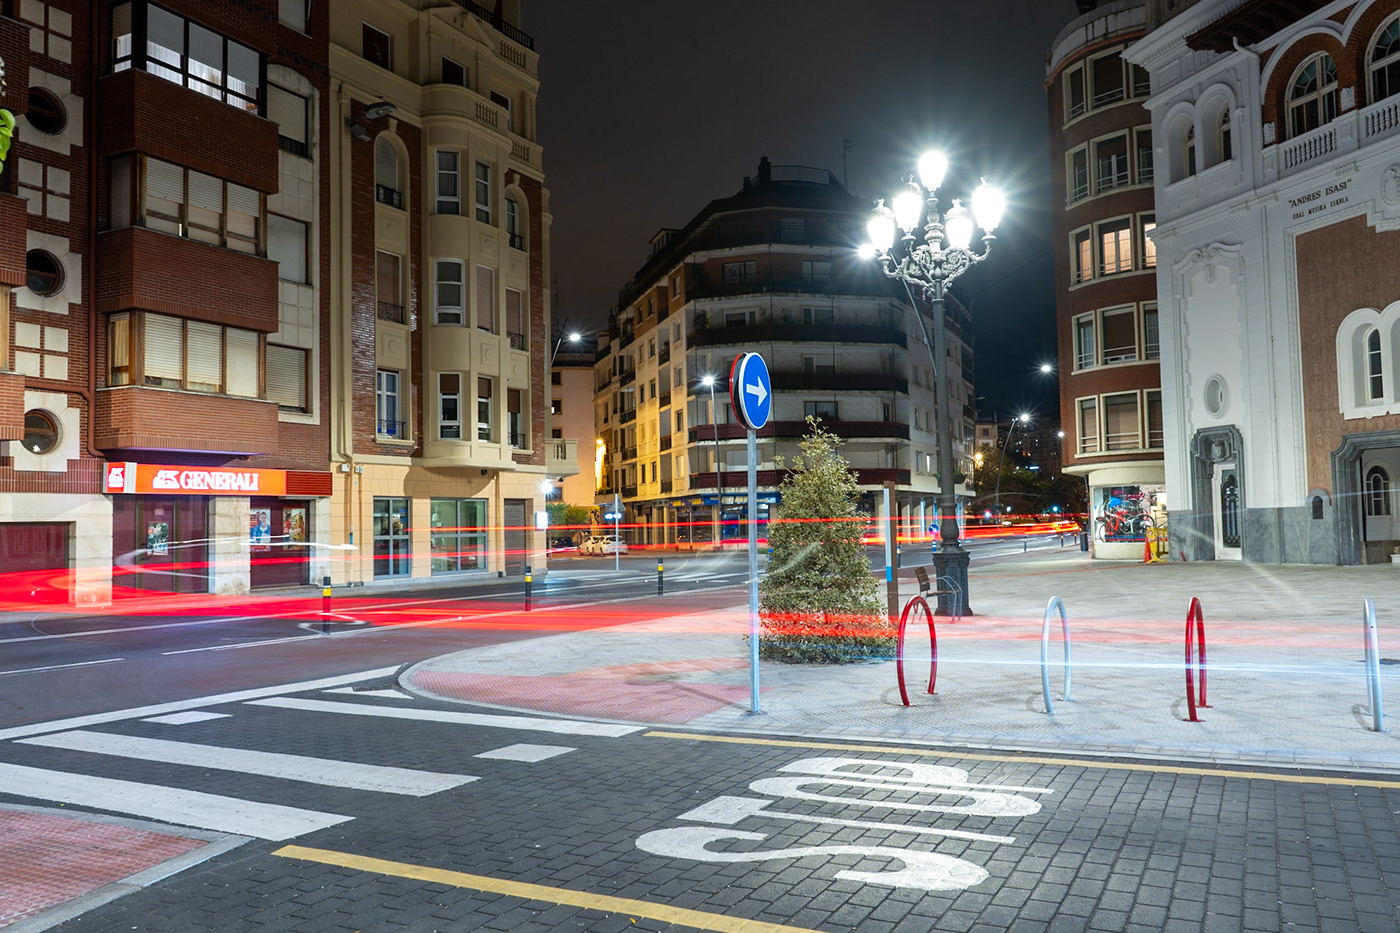 night photography long exposure sony alpha street photography spain Europe lightroom wacom basque country getxo